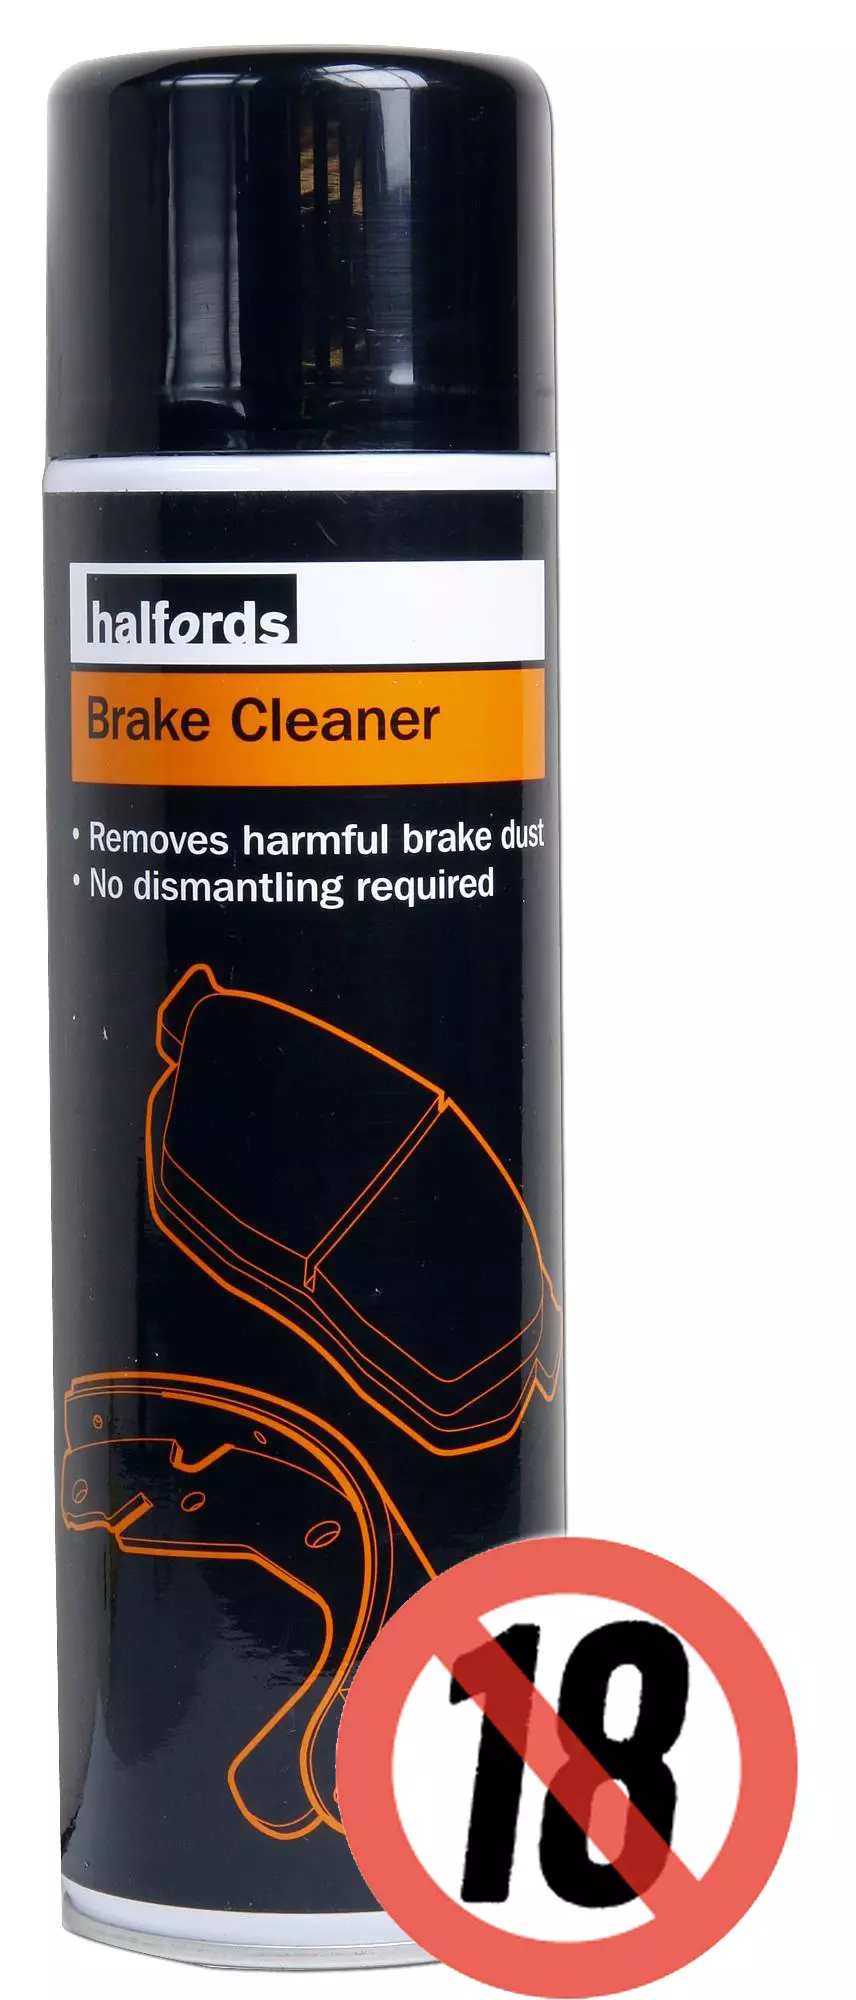 halfords disc brakes